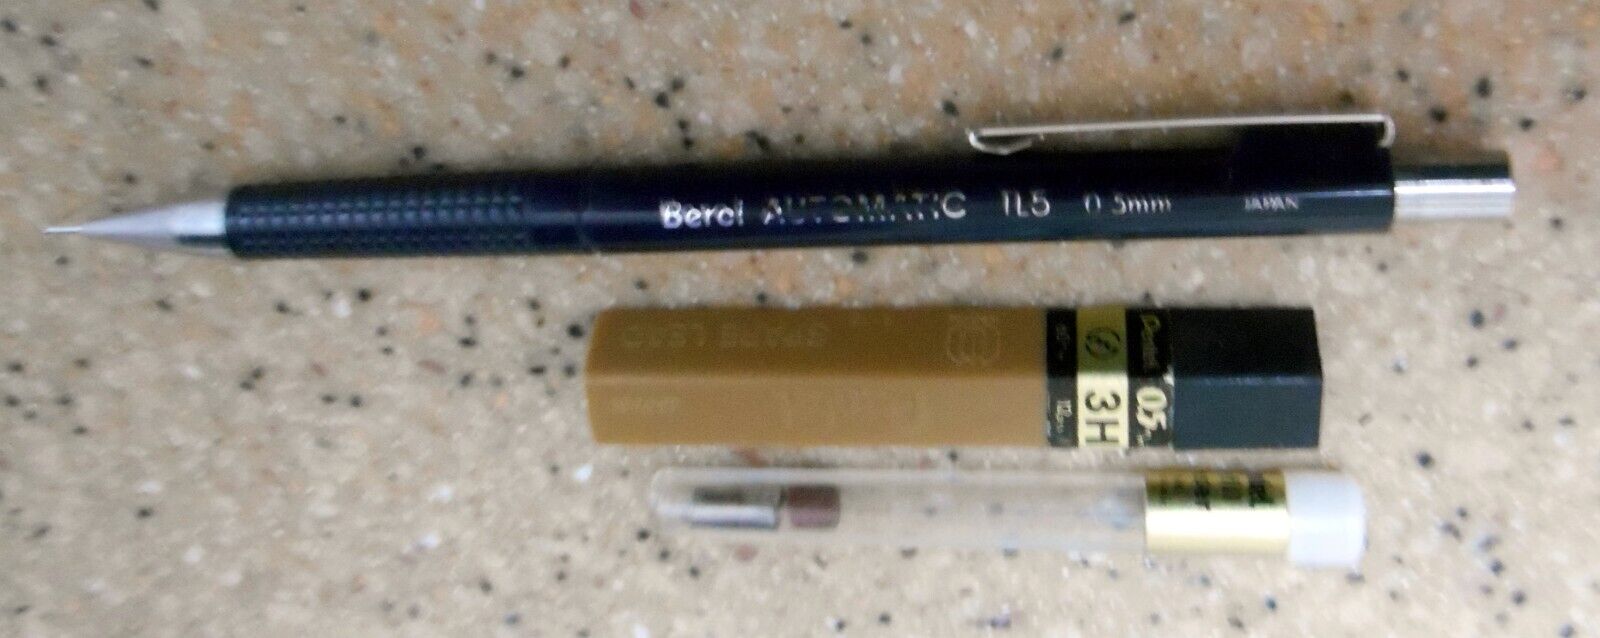 Berol Automatic TL5 Mechanical Pencil  0.5mm  Dark Blue  Japan